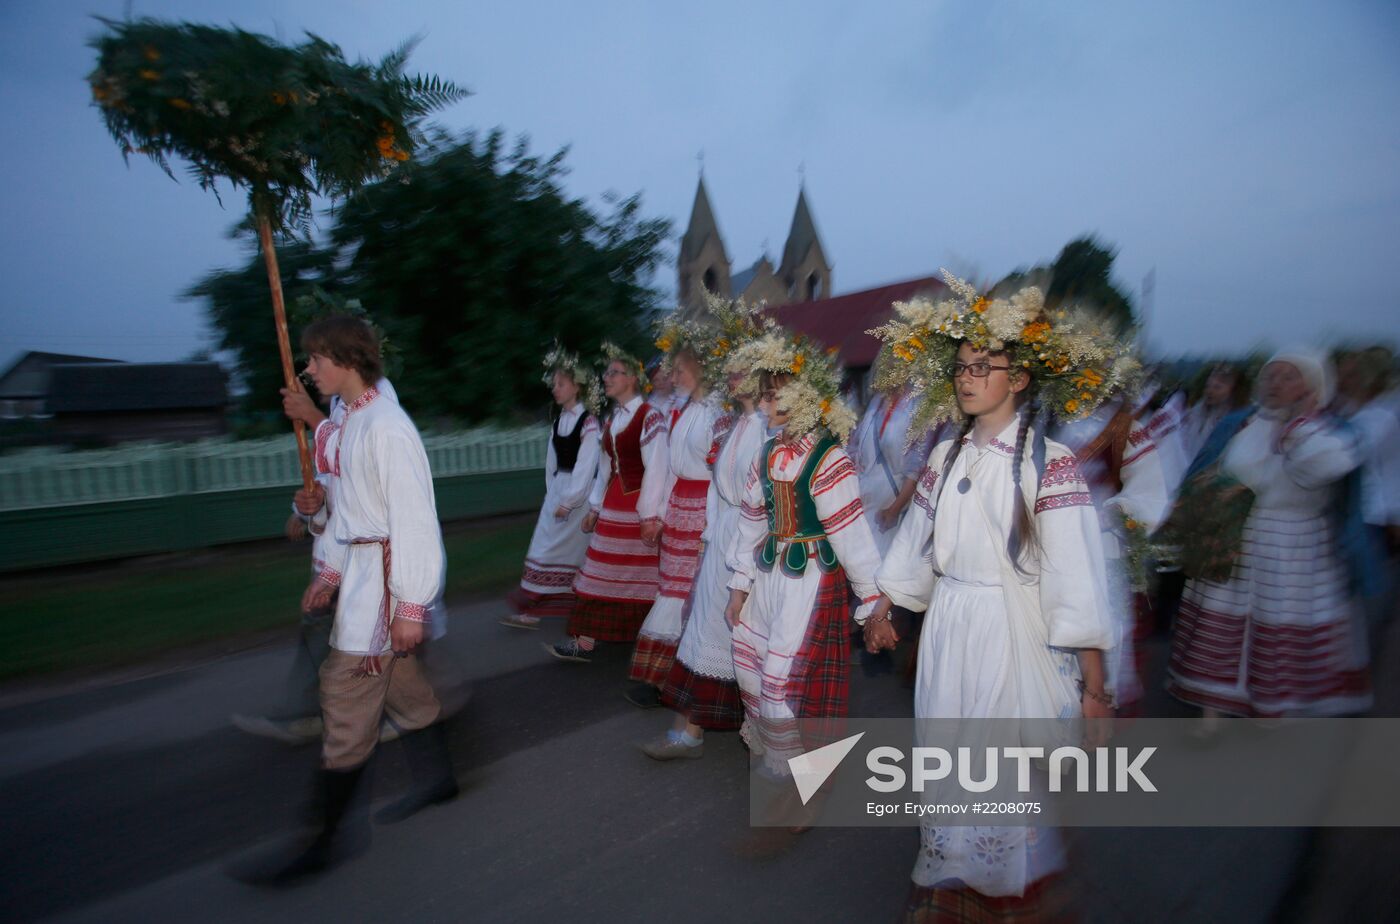 Summer solstice holiday Kupalye celebrated in Belarus